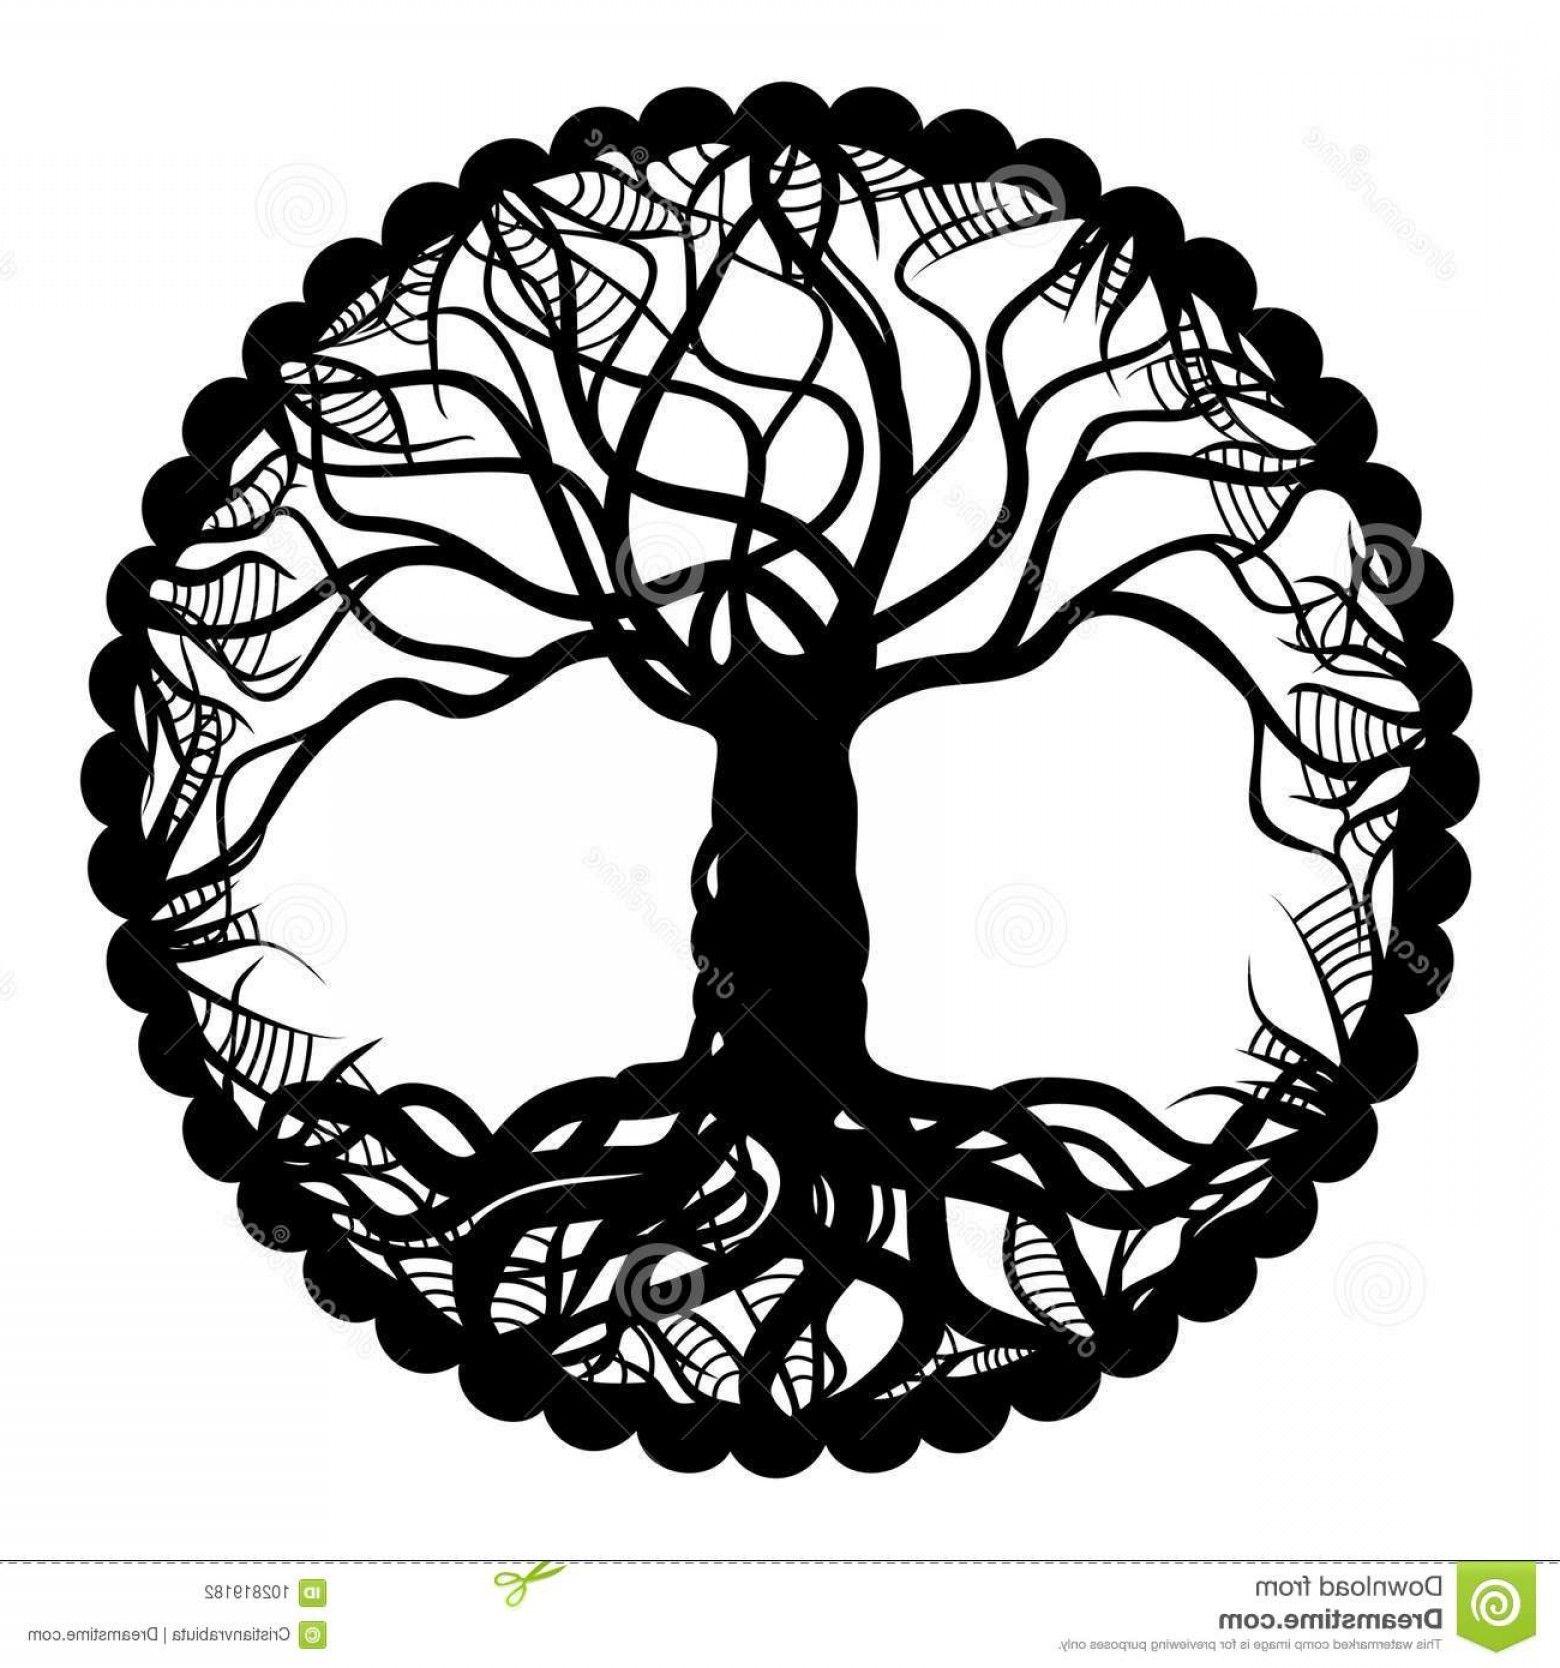 Black and White Tree in Circle Logo - Black White Tree Life Medallion Illustration Image